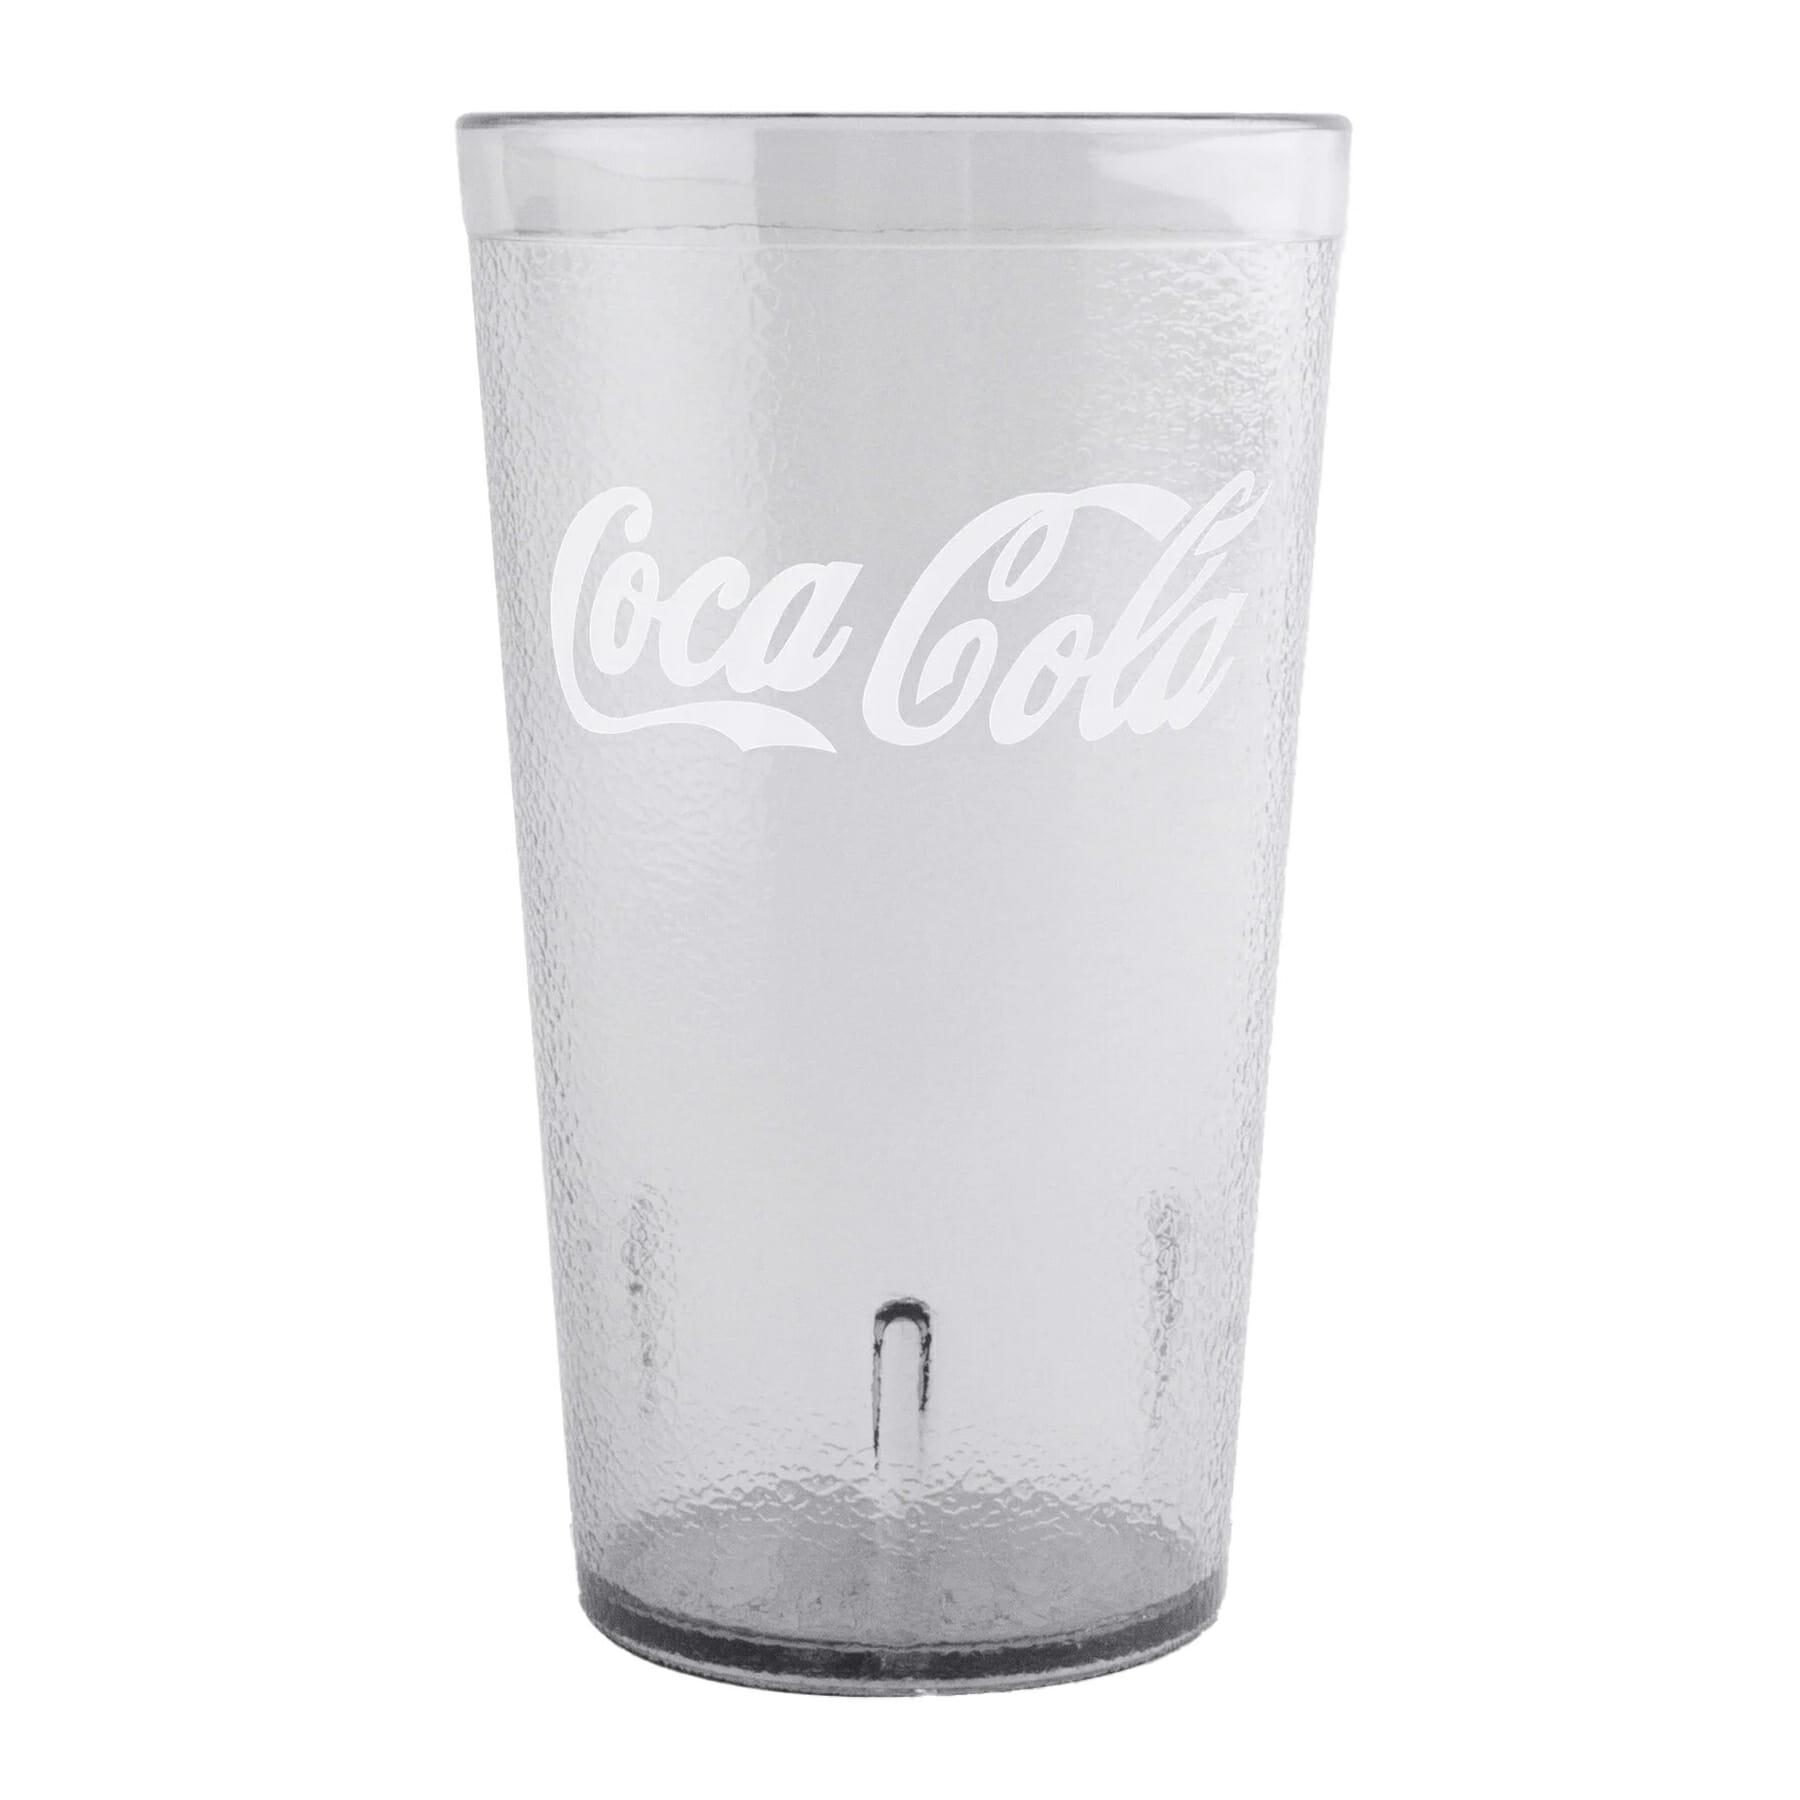 G.E.T. 6624CC-C 24 oz. Clear Plastic Coca-Cola Drink Tumbler 